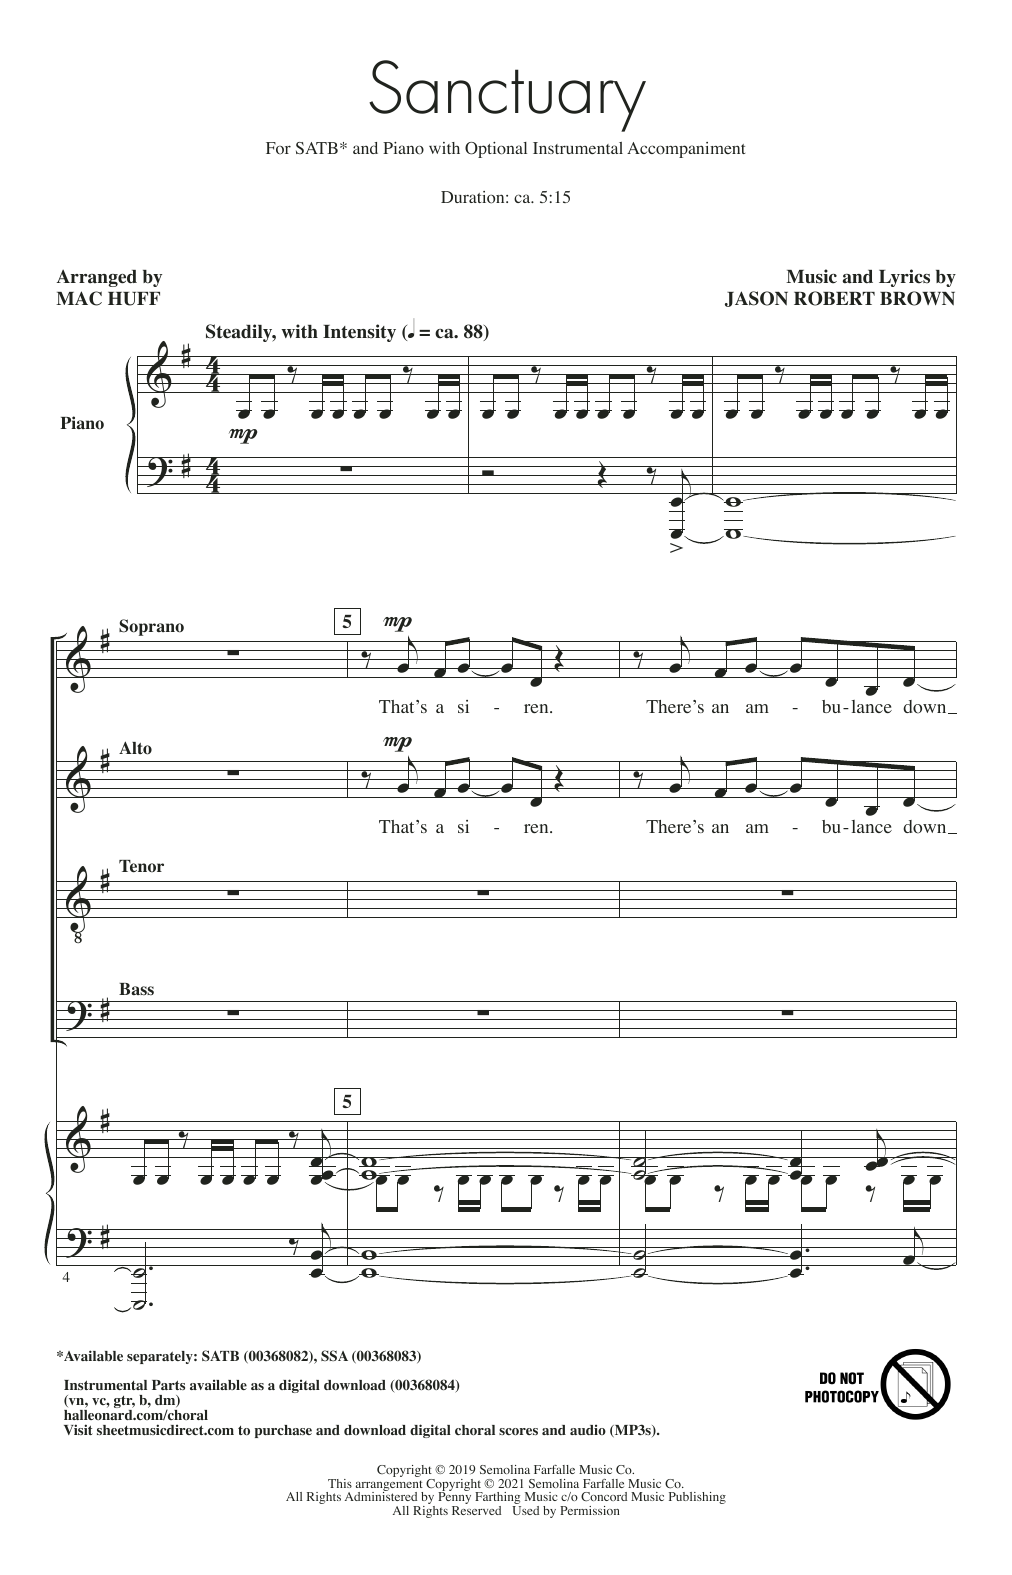 Jason Robert Brown Sanctuary (arr. Mac Huff) Sheet Music Notes & Chords for SATB Choir - Download or Print PDF